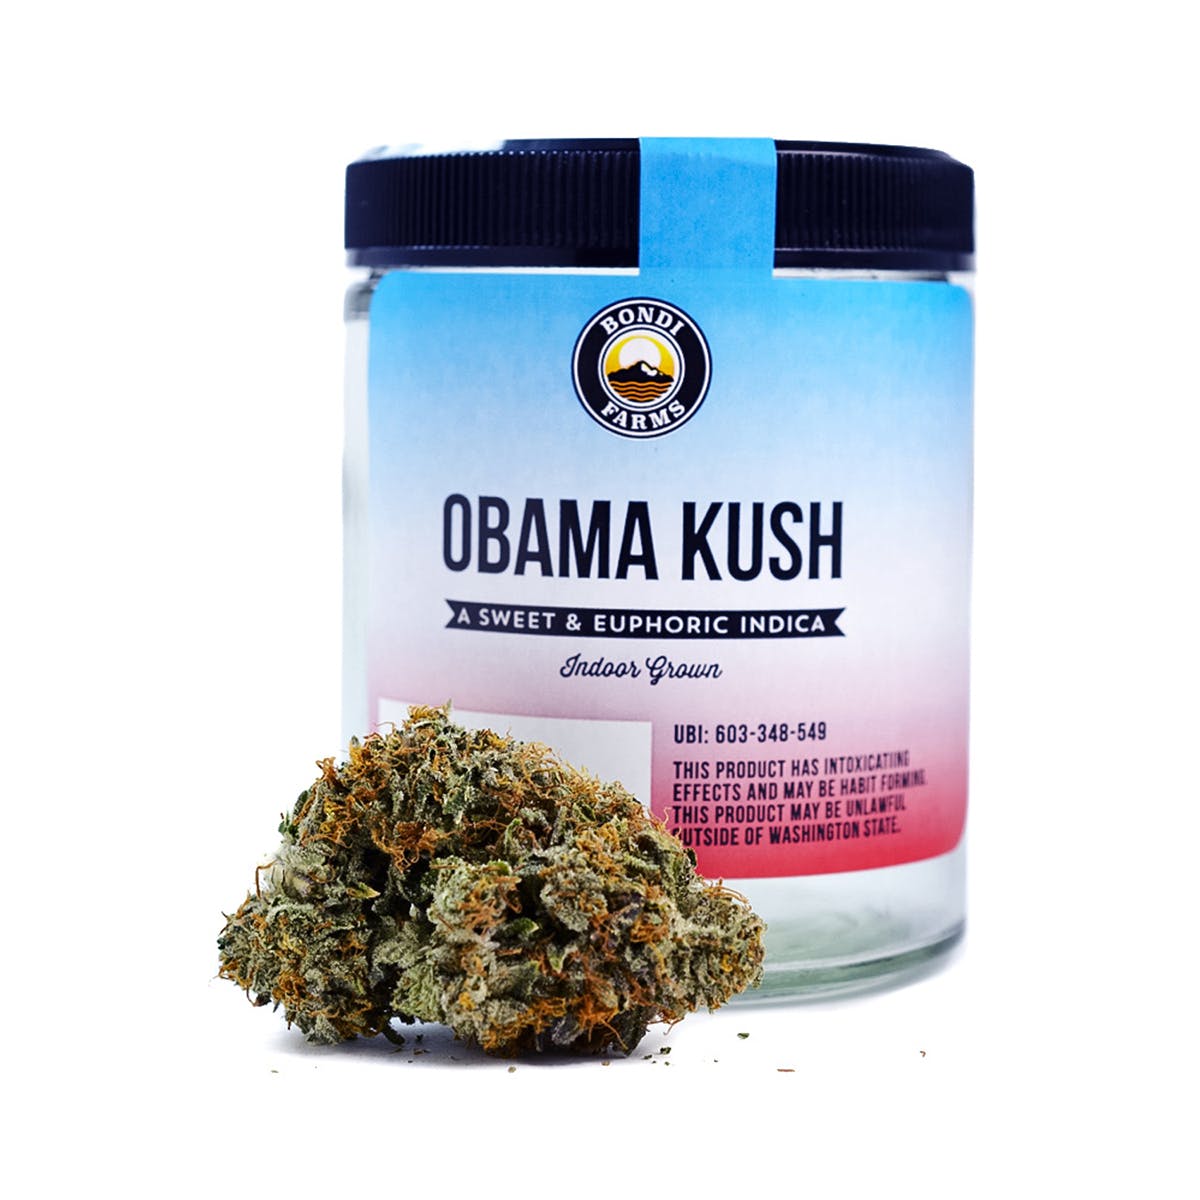 marijuana-dispensaries-canna-west-seattle-in-seattle-obama-kush